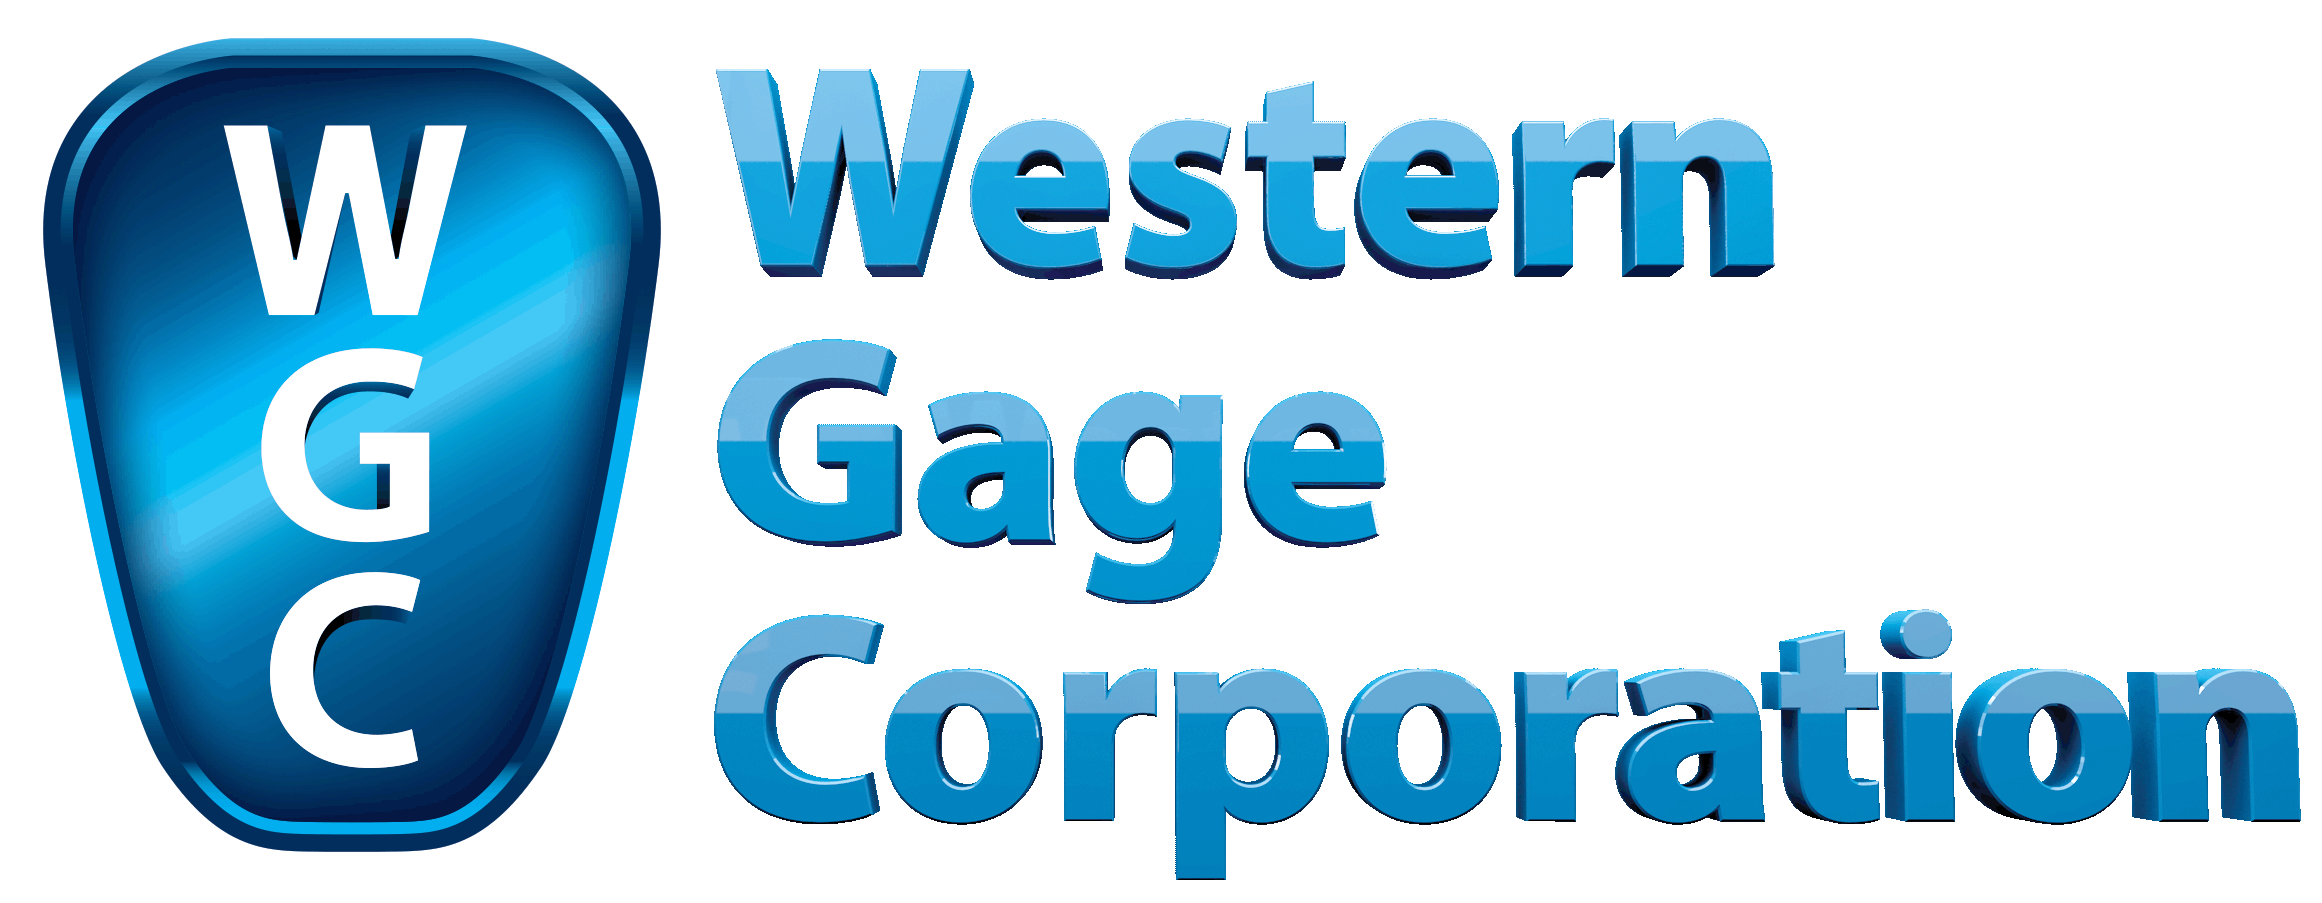 Western Gage Corp.